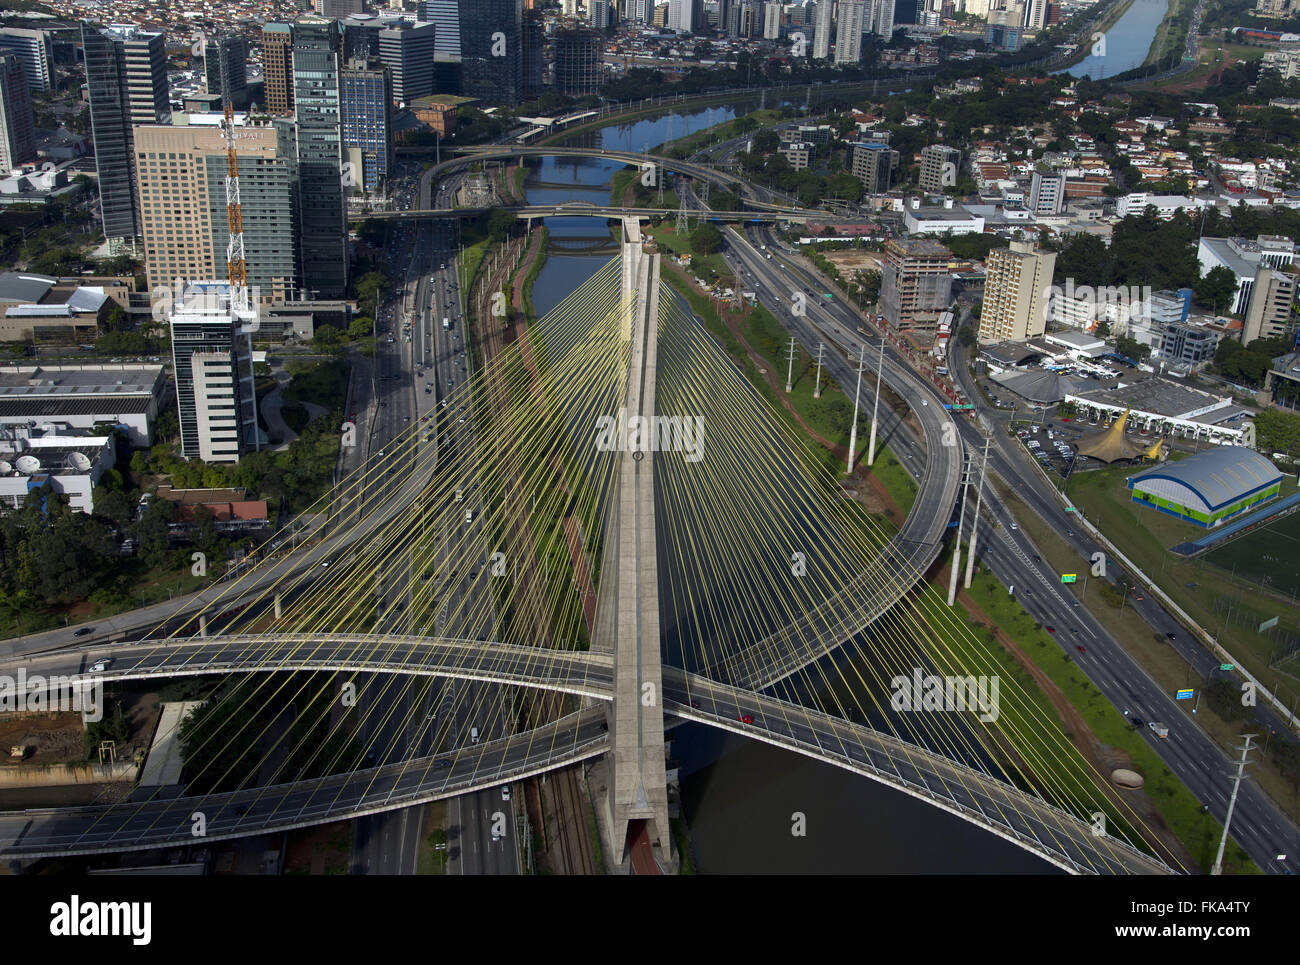 Aerial view of the Cable-Stayed Bridge Octavio Frias de Oliveira on the Pinheiros River Stock Photo